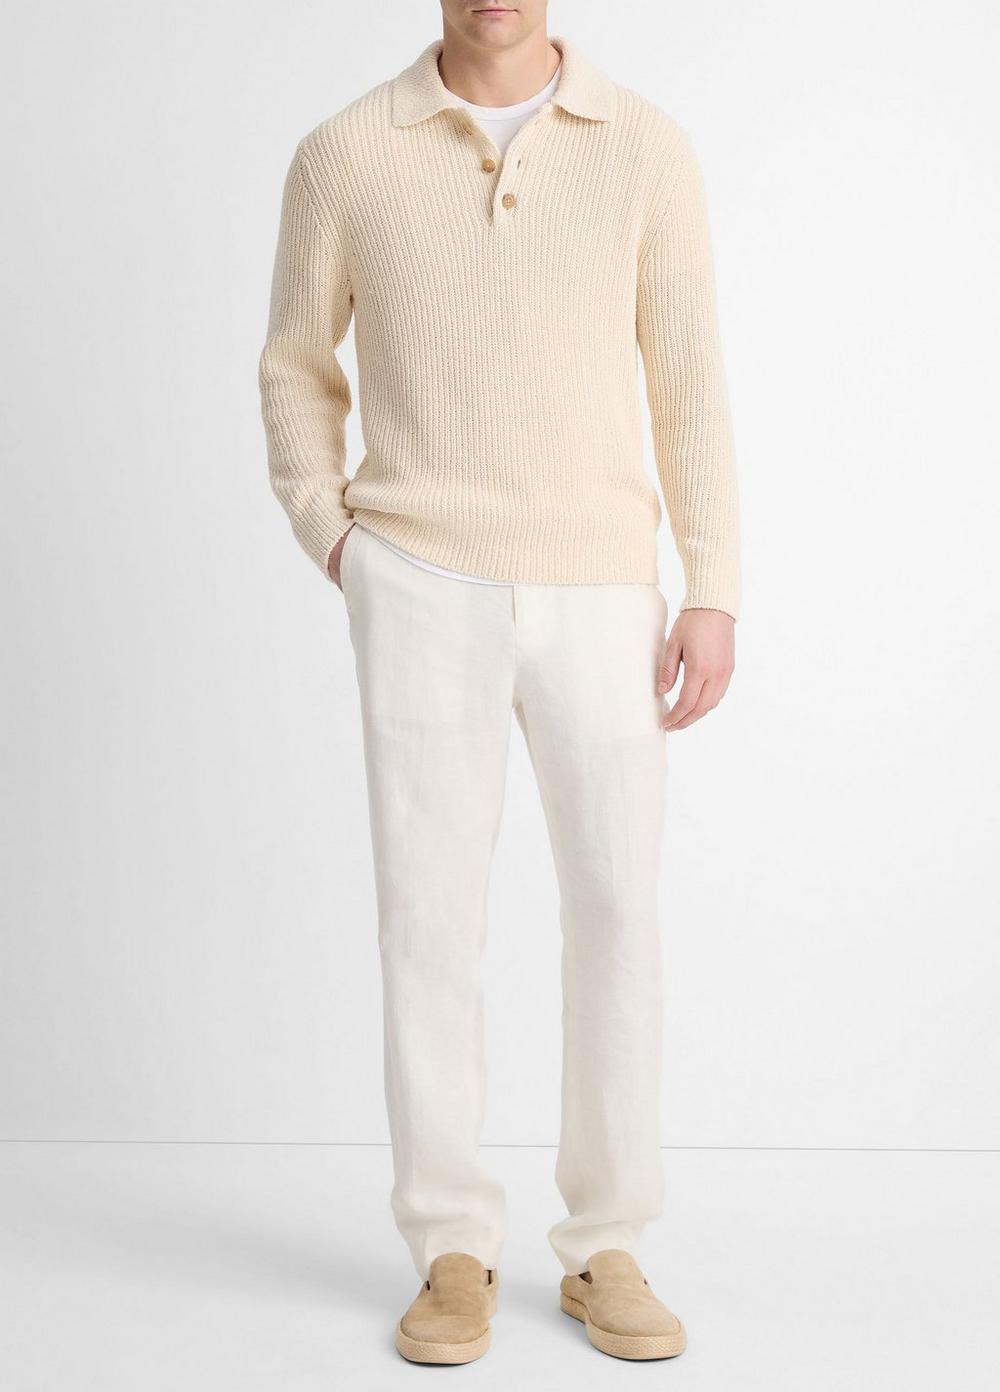 Italian Cotton-Blend Shaker Polo Sweater, Bone, Size XL Vince